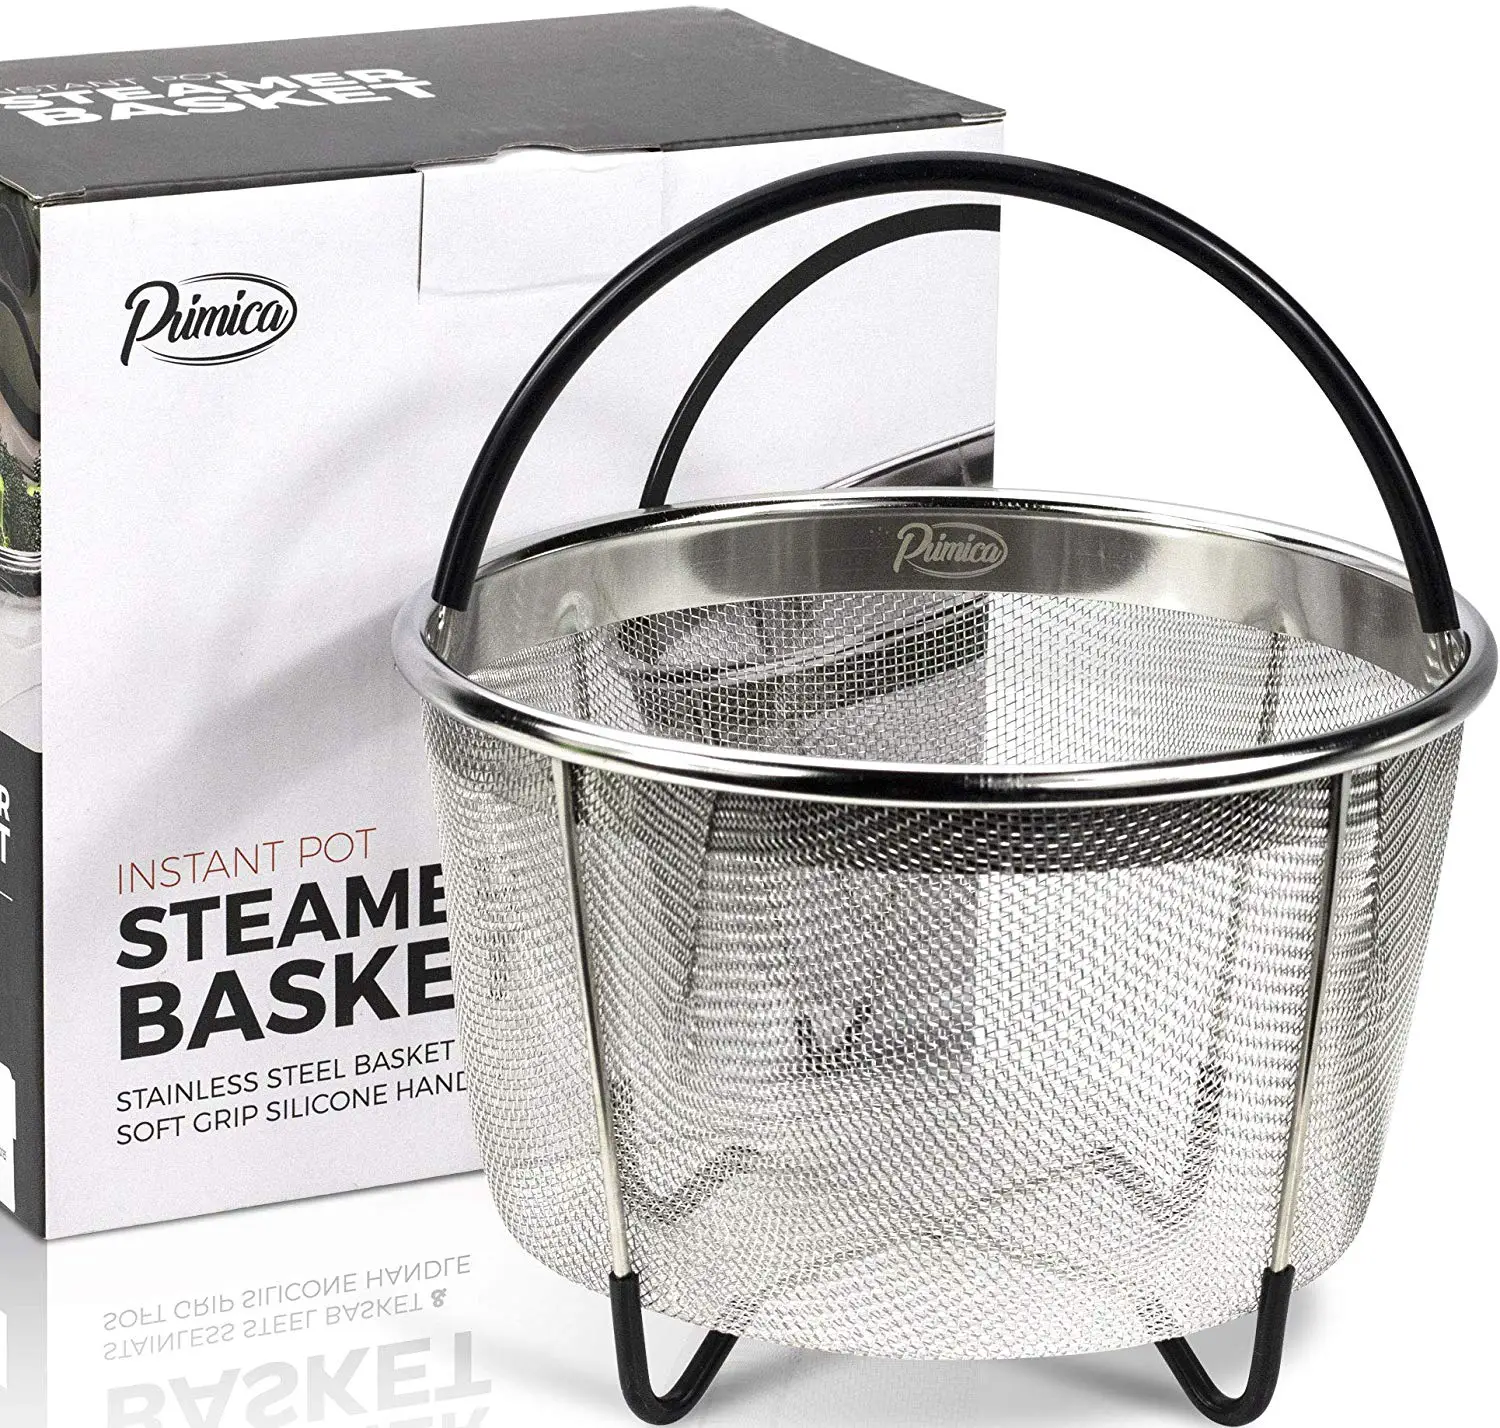 Primica 6 Quart Steamer Basket Fits Instant Pot And Other 6 And 8 Quart ...